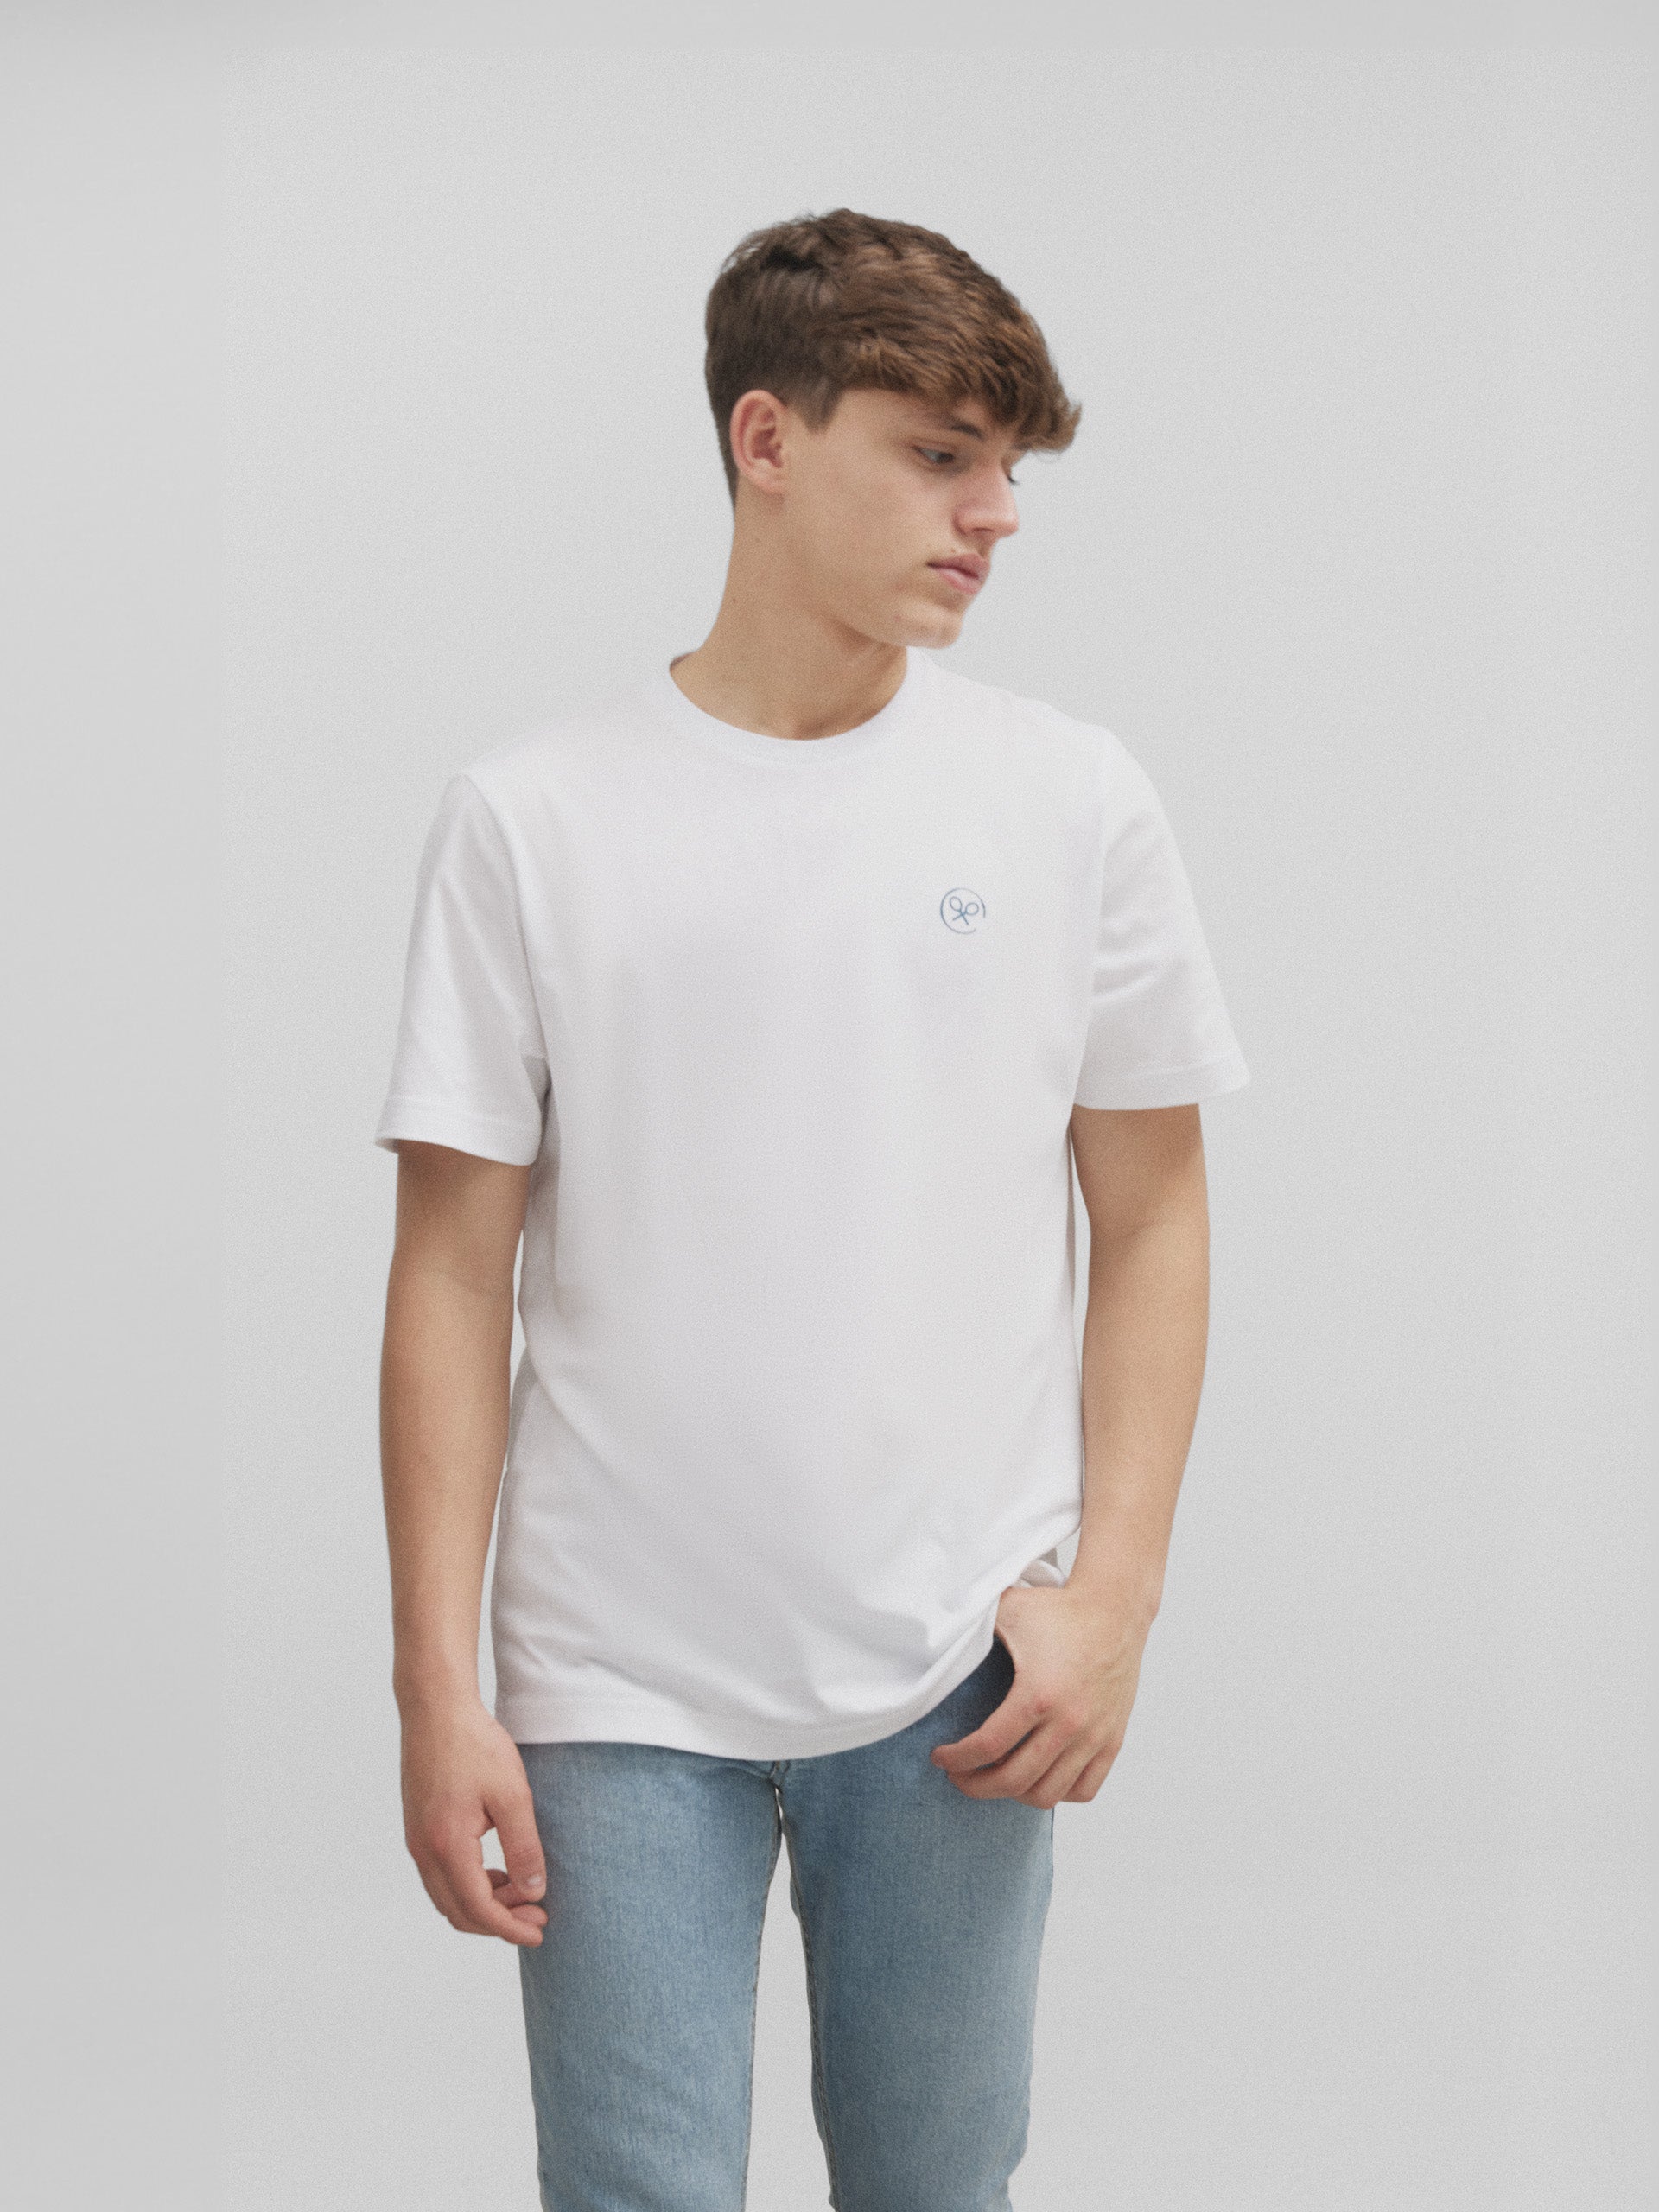 Camiseta circulo raqueta blanca